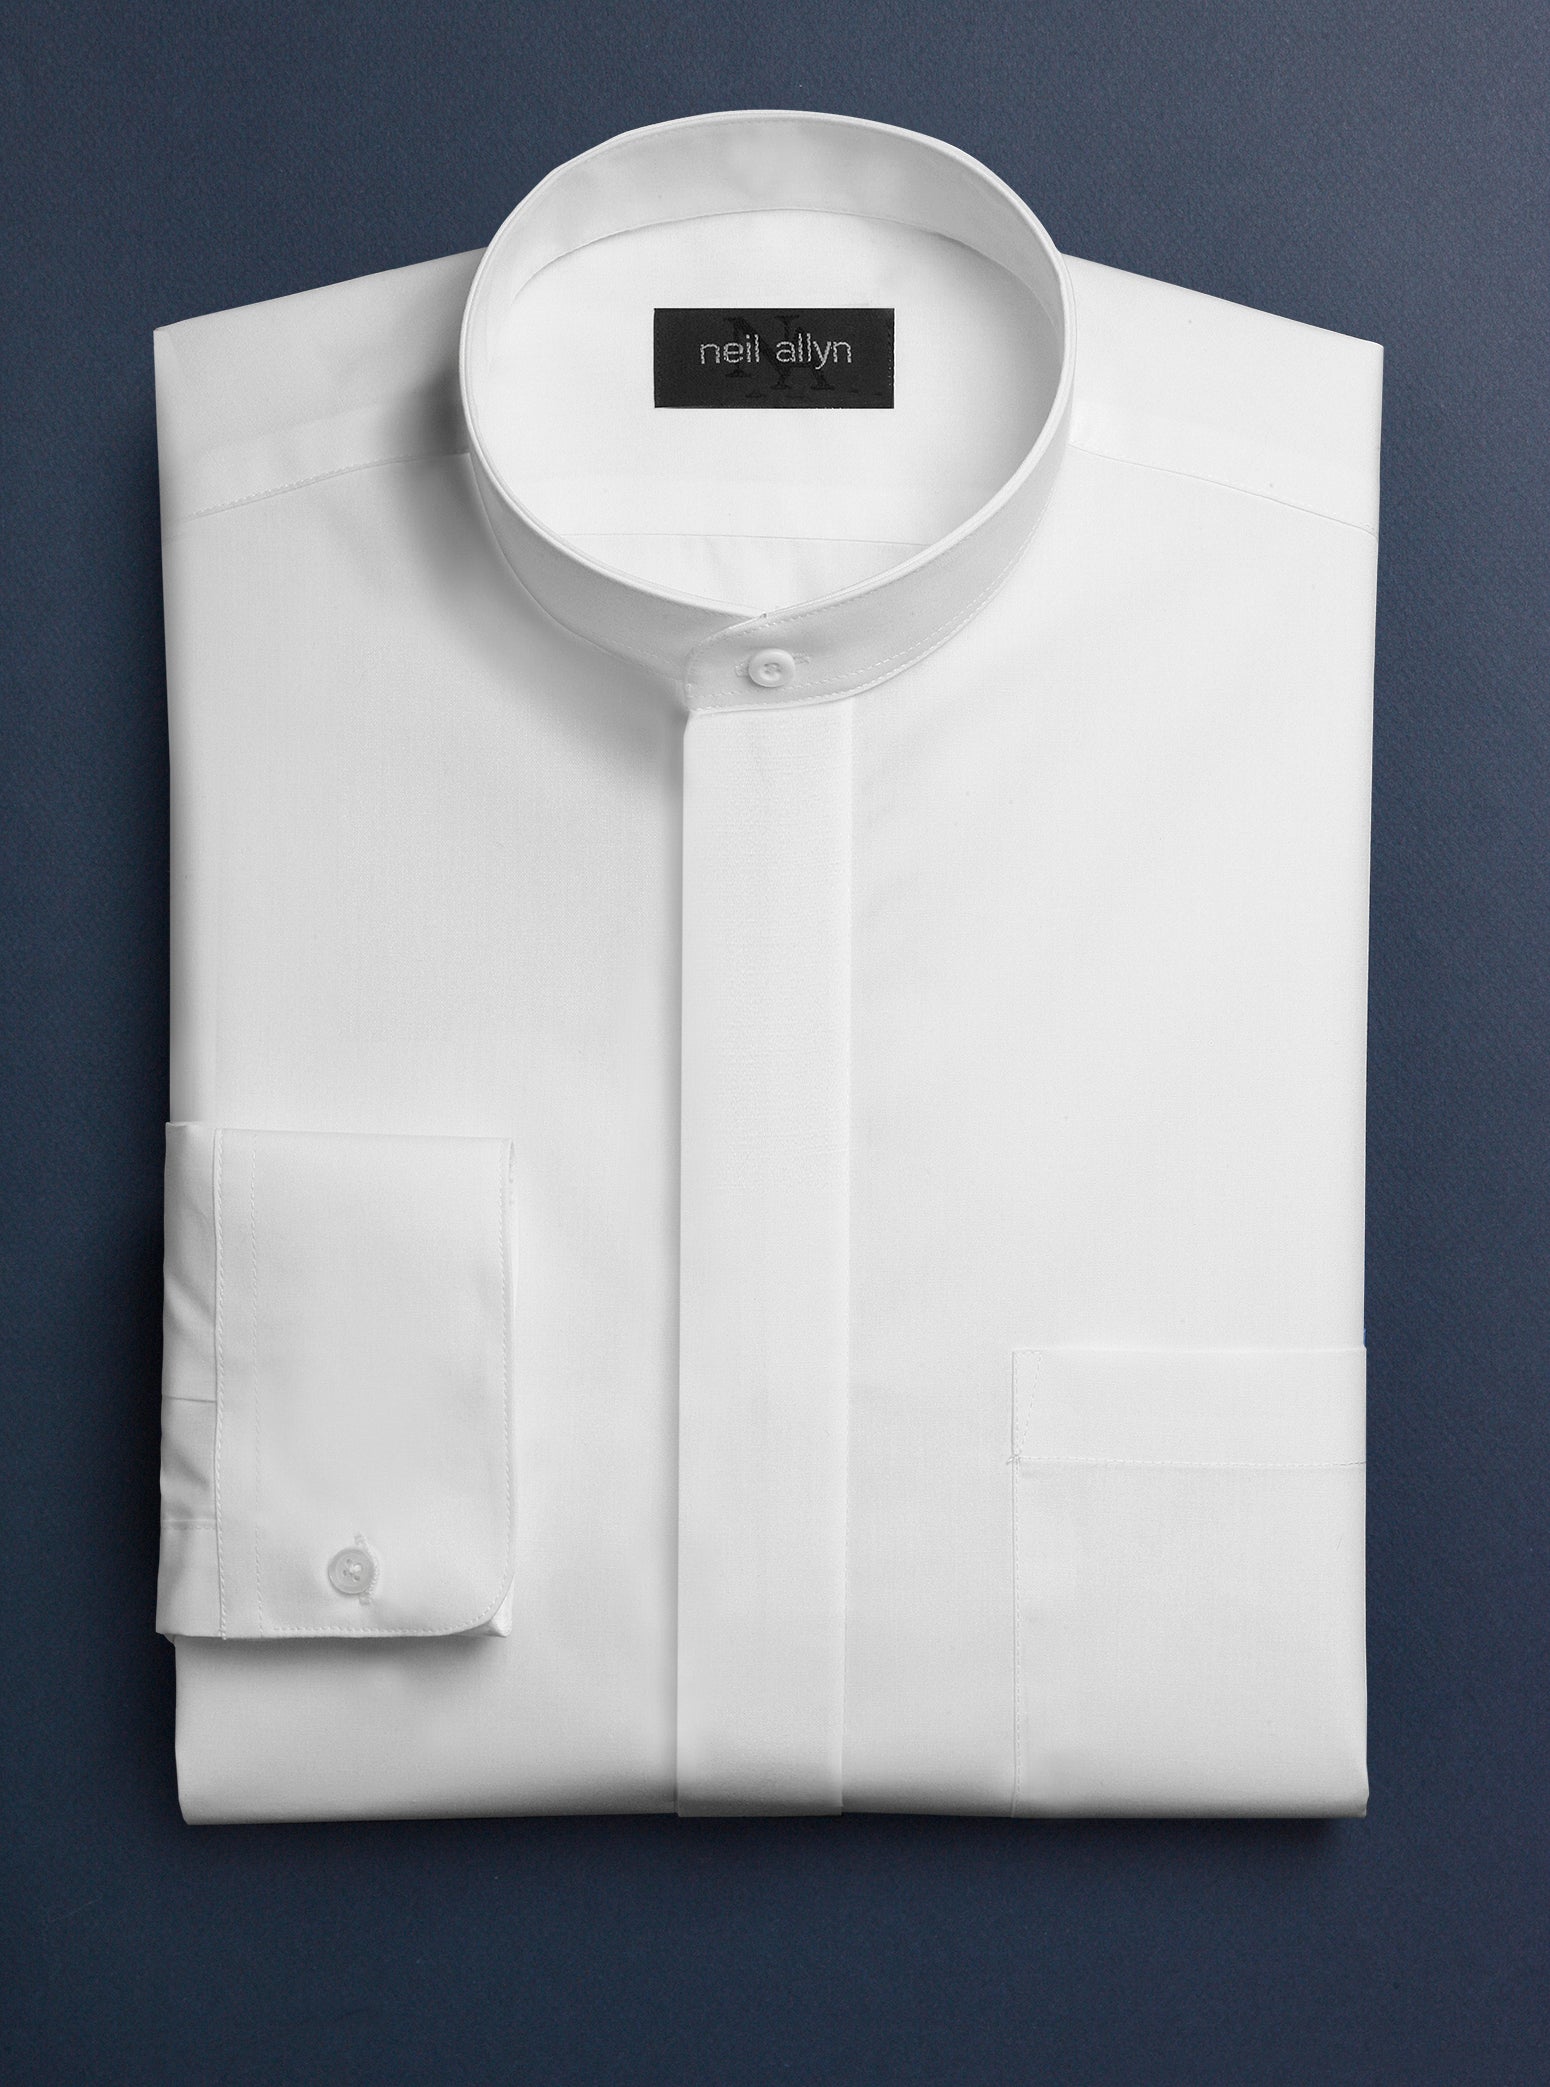 white banded collar dress shirt